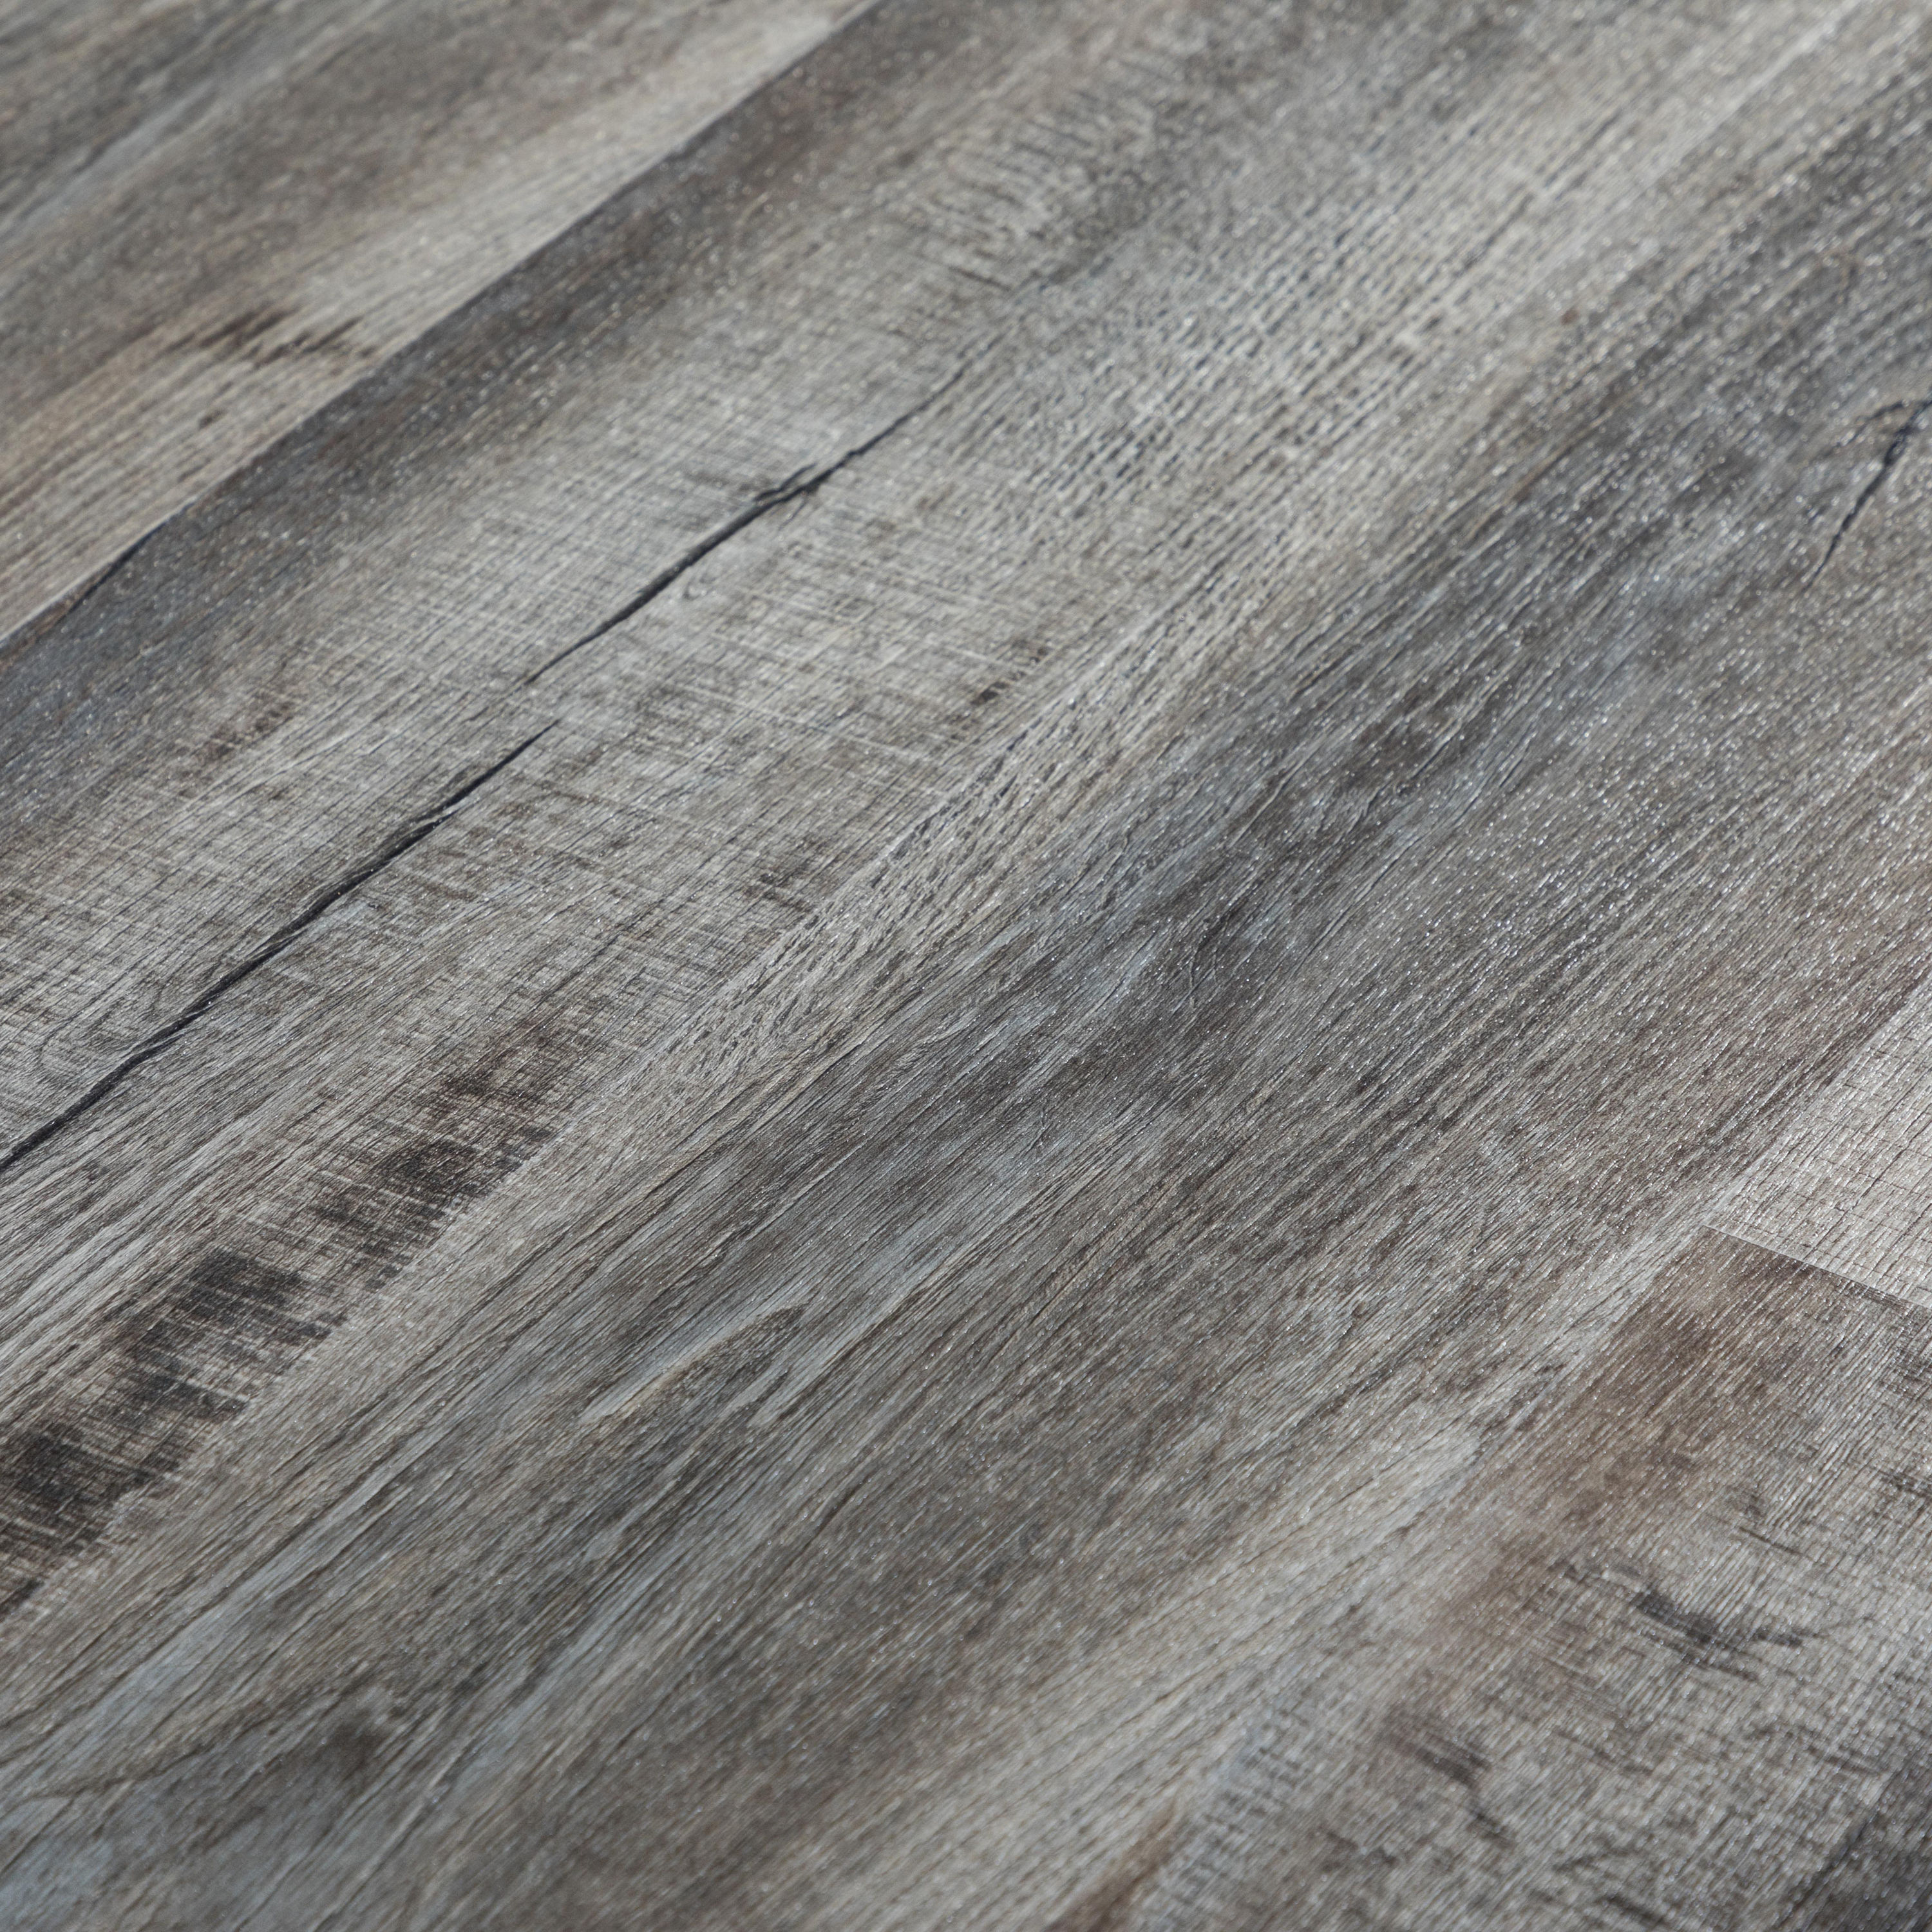 Heritage Grey Luxury Vinyl Plank Flooring - Grey Color